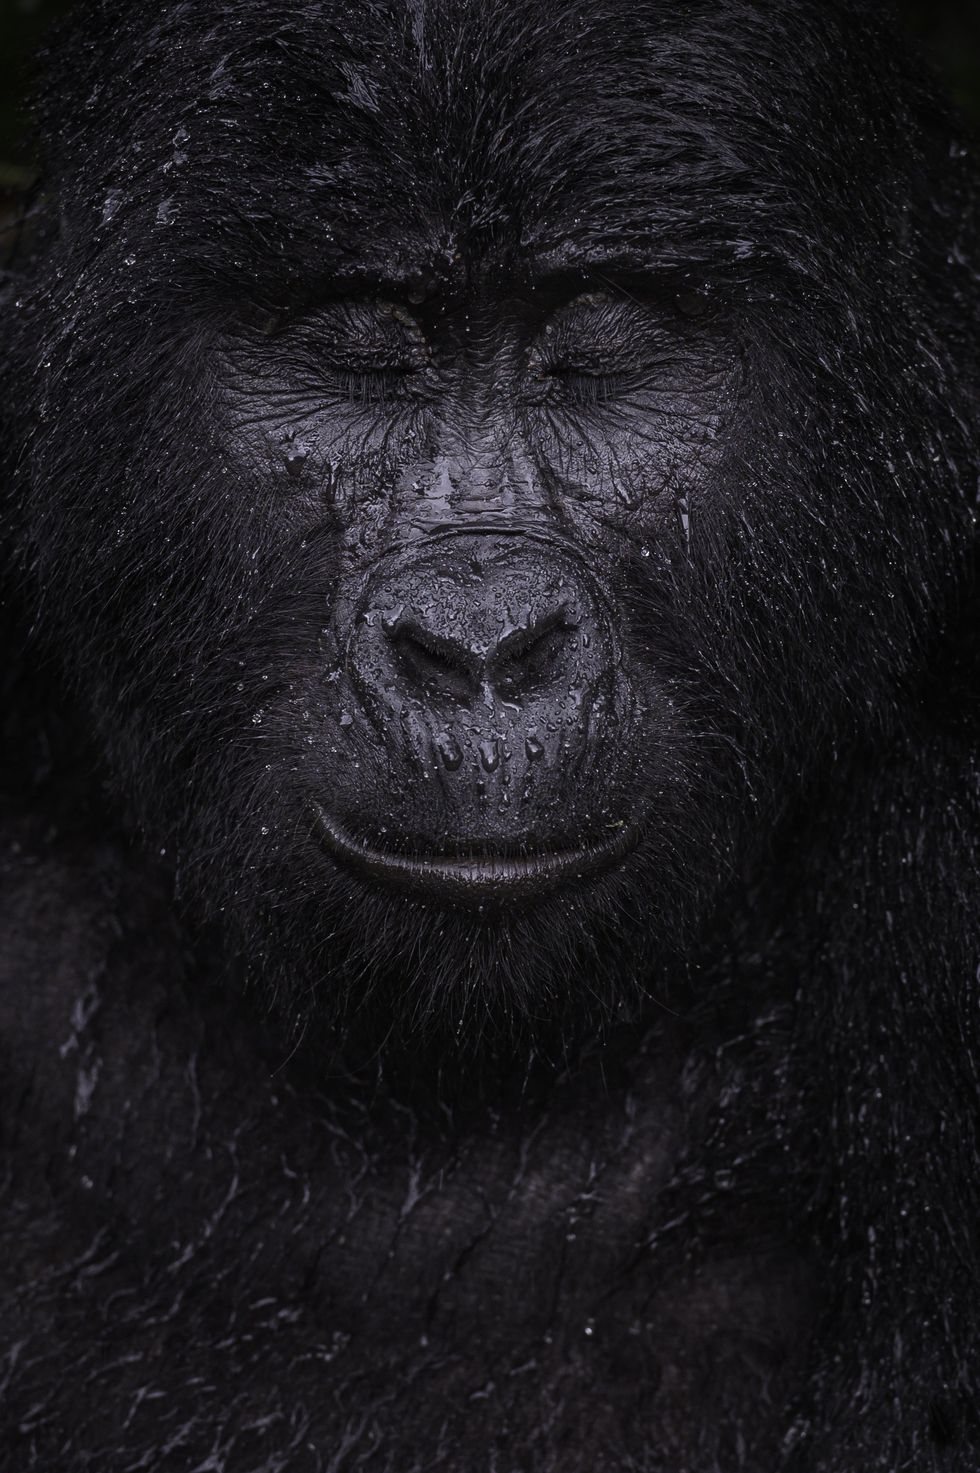 A gorilla image by Majed Ali won the Wildlife Photographer of the Year: Animal Portraits Award (Majed Ali/Wildlife Photographer of the Year/PA)